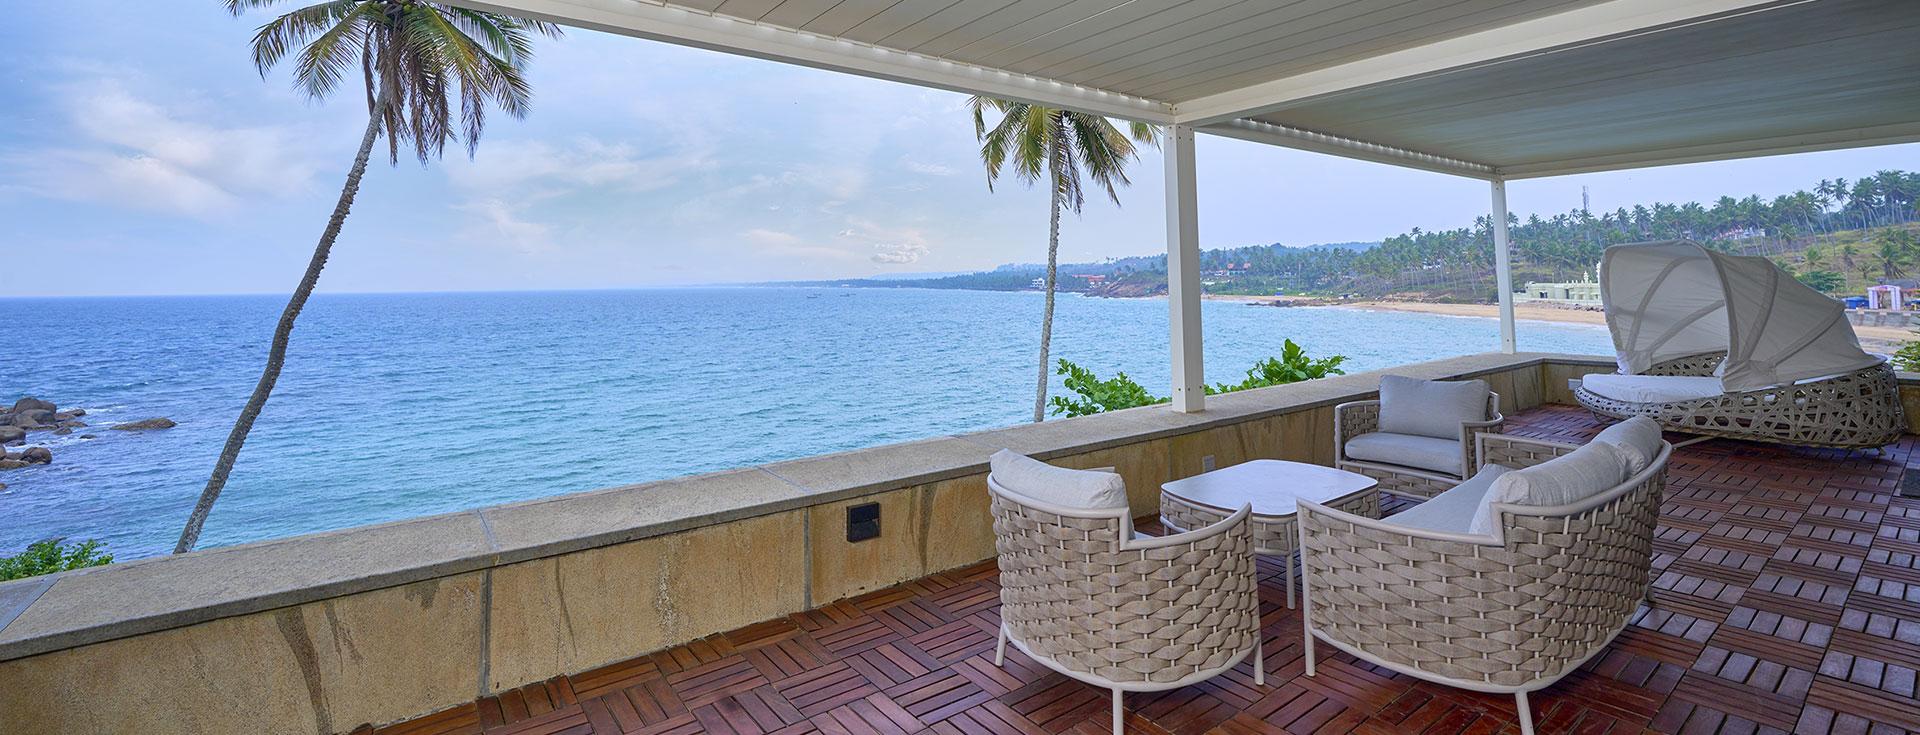 Luxurious Ocean View Suite at The Leela Kovalam